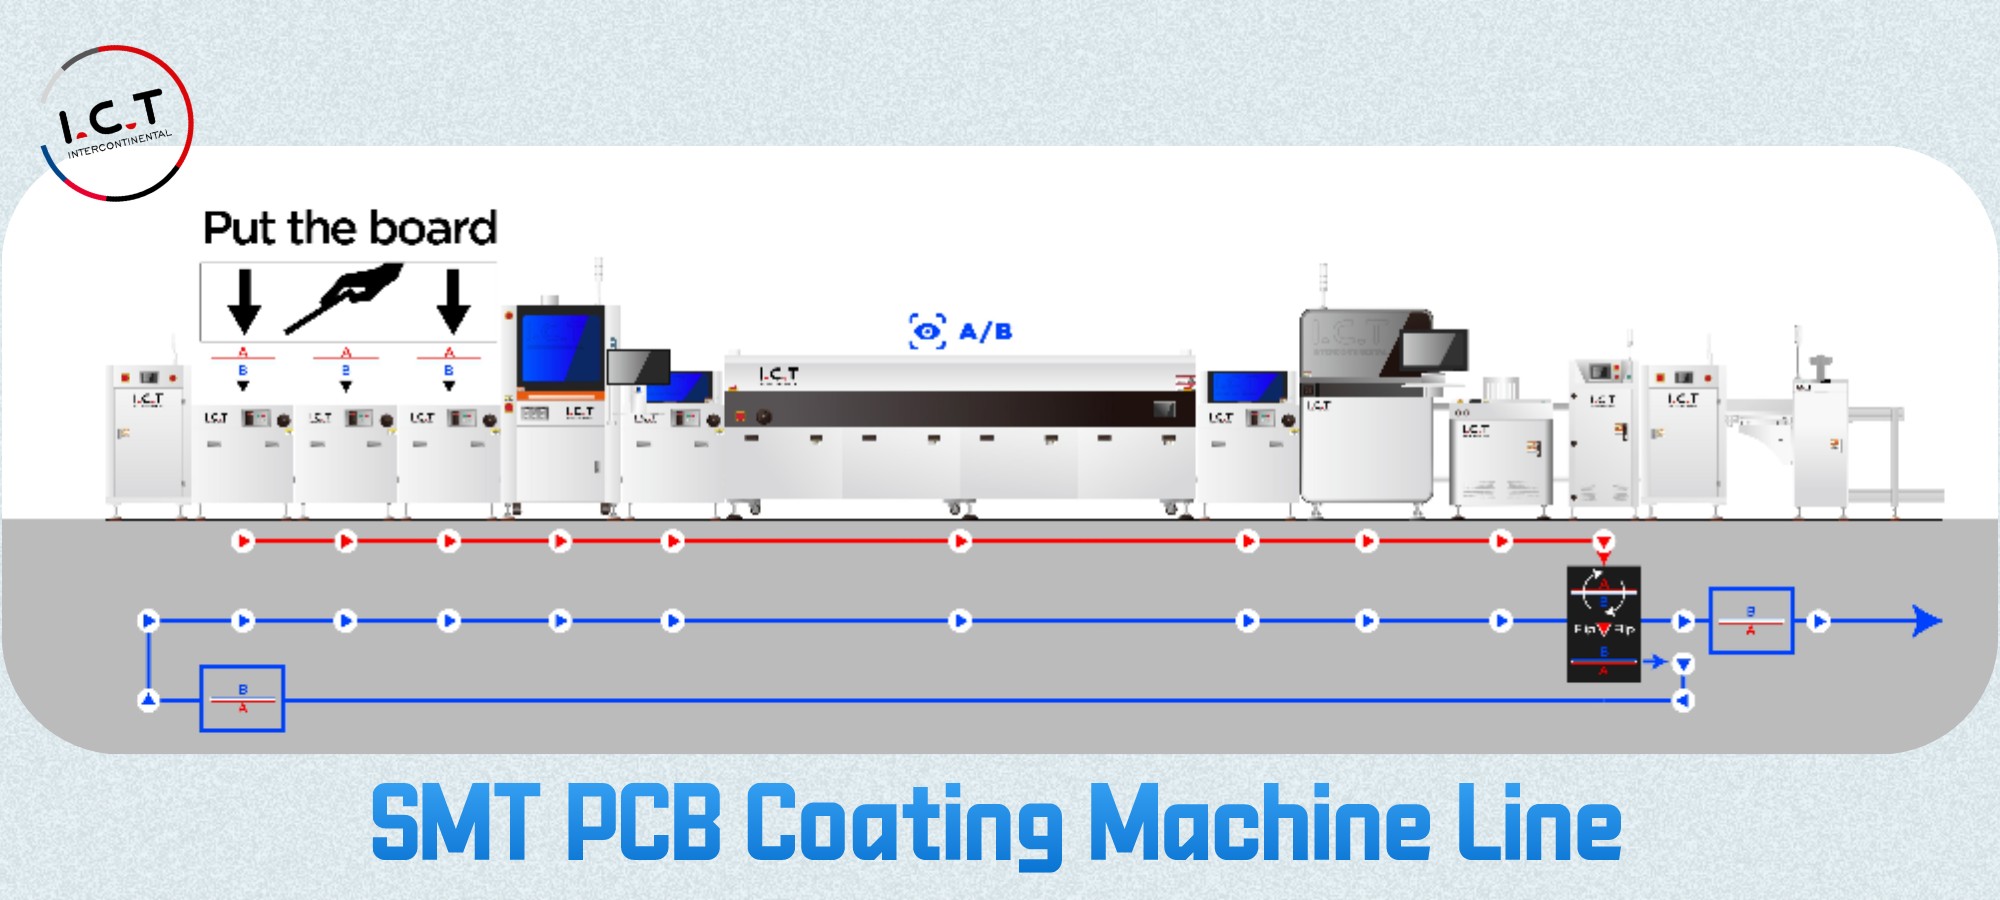 SMT PCB Coating Machine Line 1